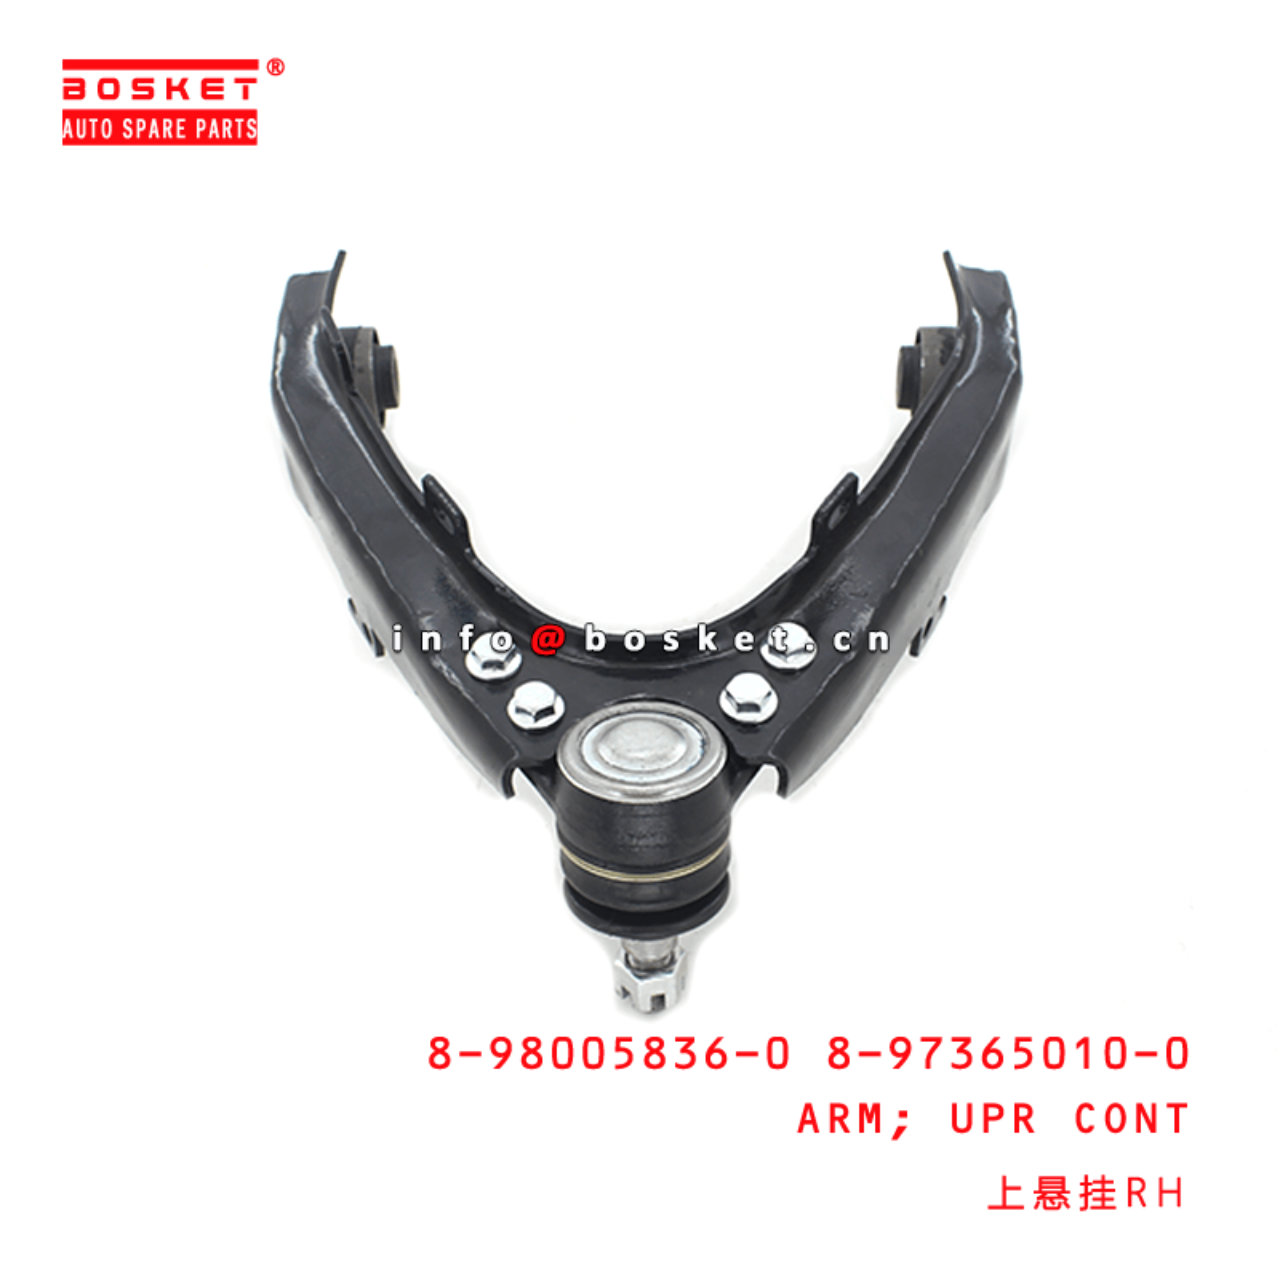 8-98005836-0 8-97365010-0 Upper Control Arm 8980058360 8973650100 Suitable for ISUZU D-MAX 4X2